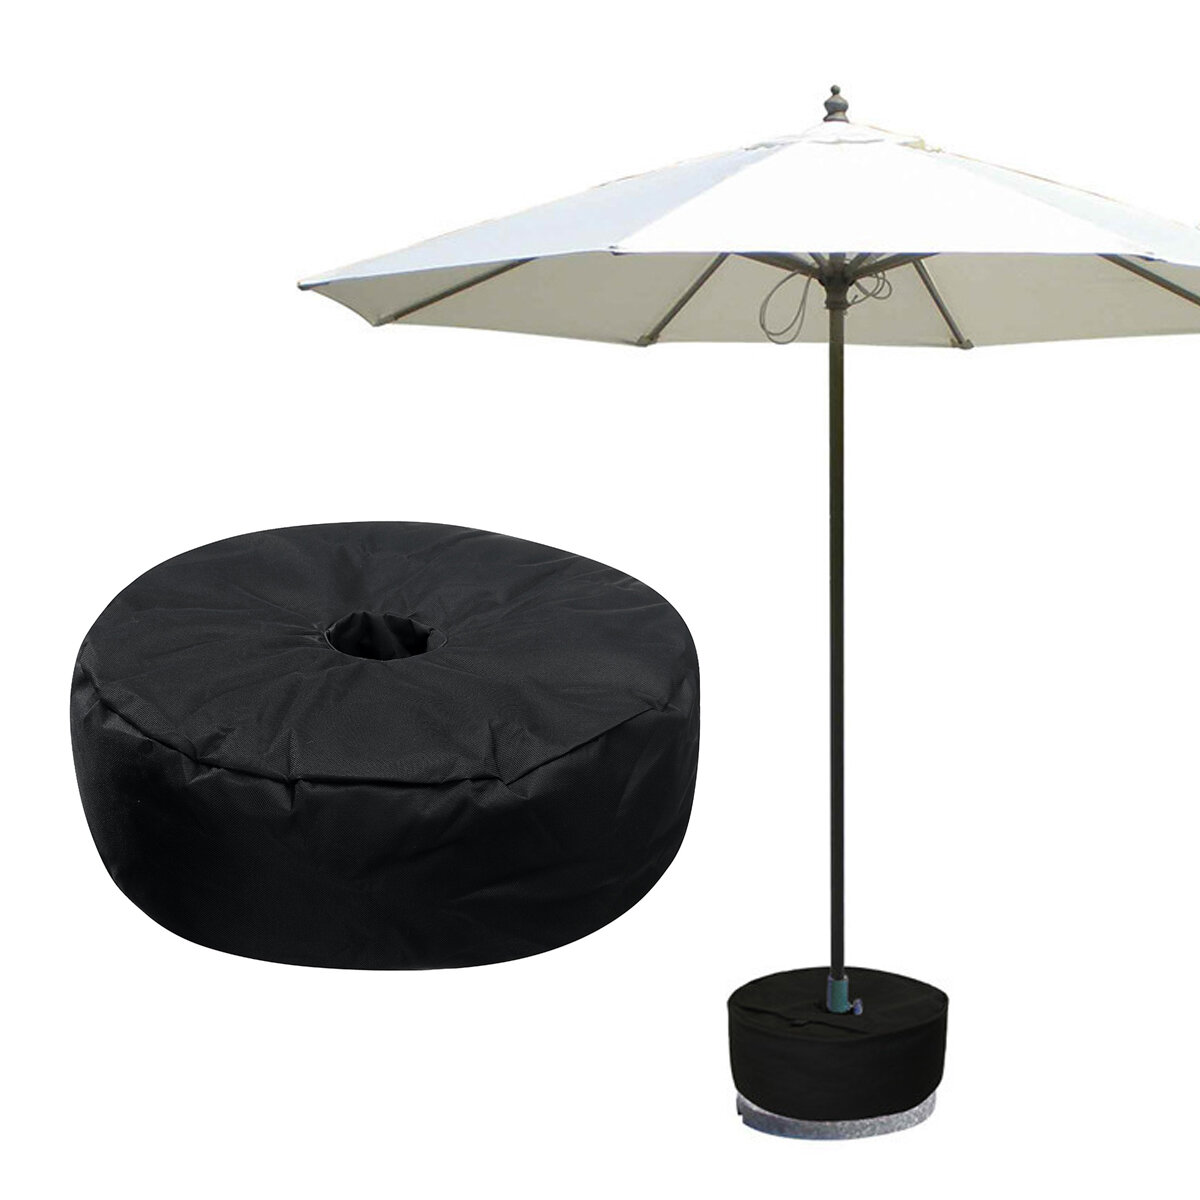 46x15cm Zware Zandzakken Paraplu Gewicht Zak Weerbestendige Parasol Paraplubak Basis voor Outdoor Te